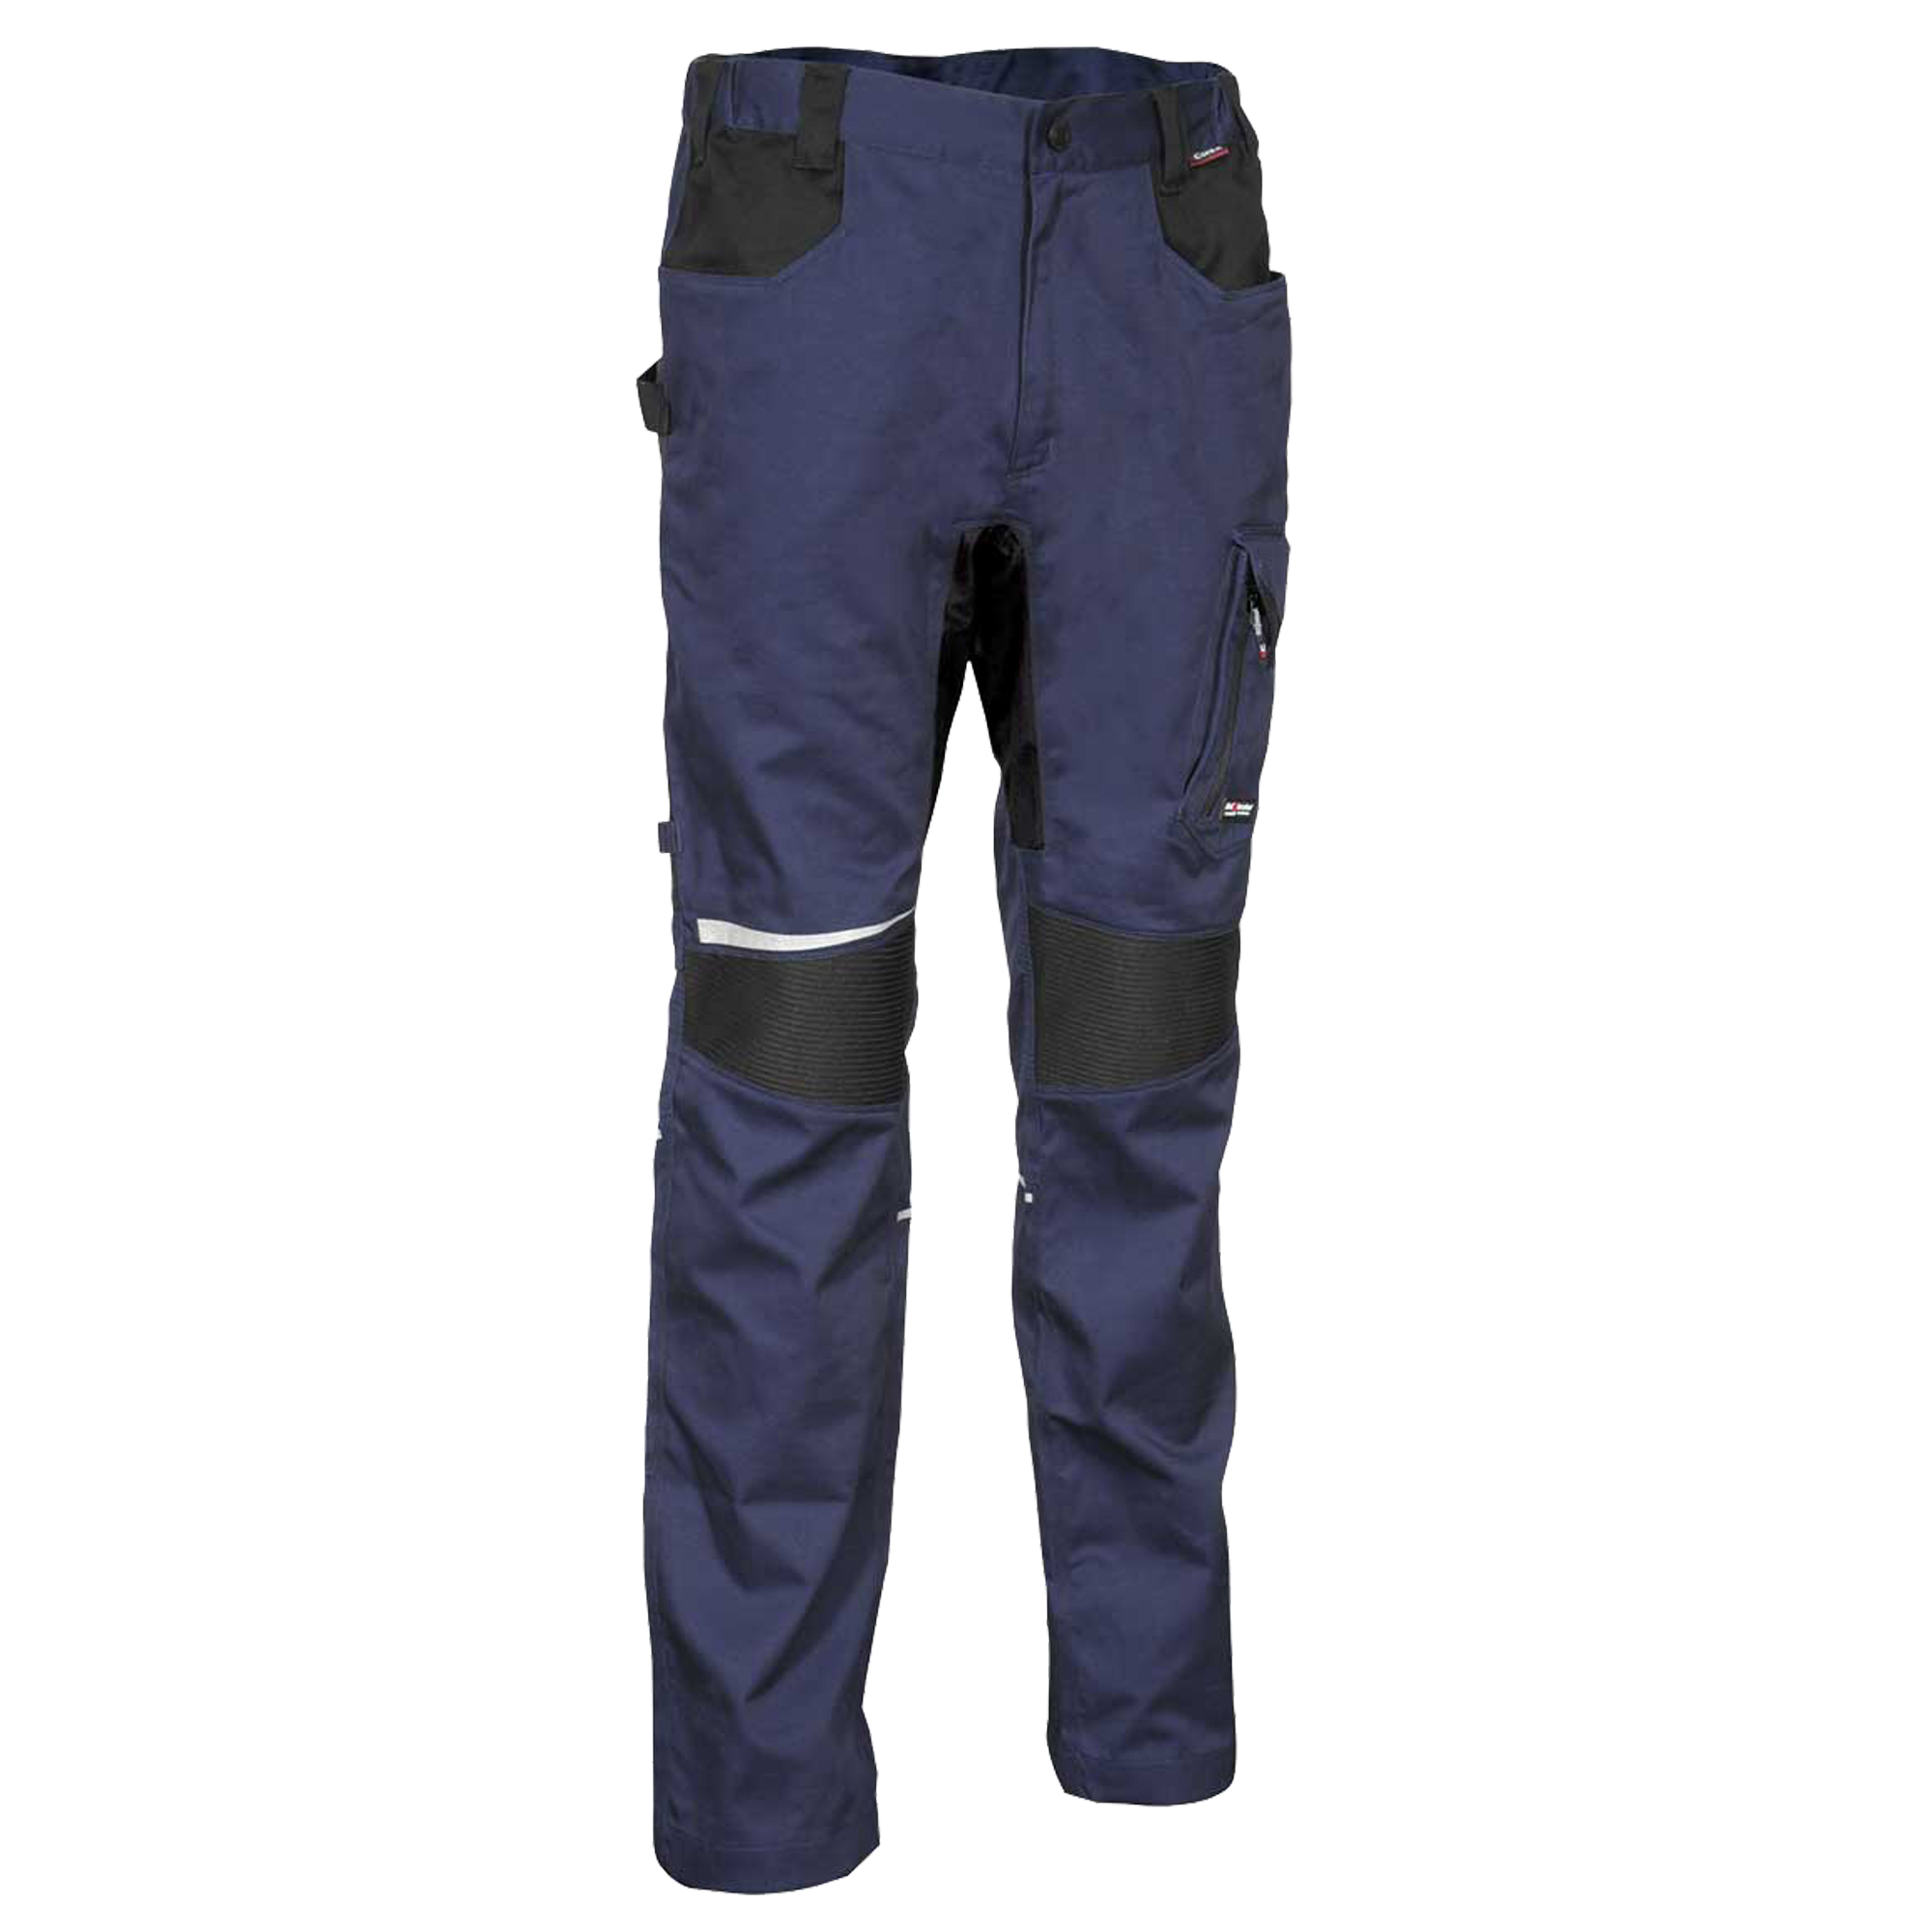 Pantalone Skiahos - taglia 50 - blu navy/nero - Cofra